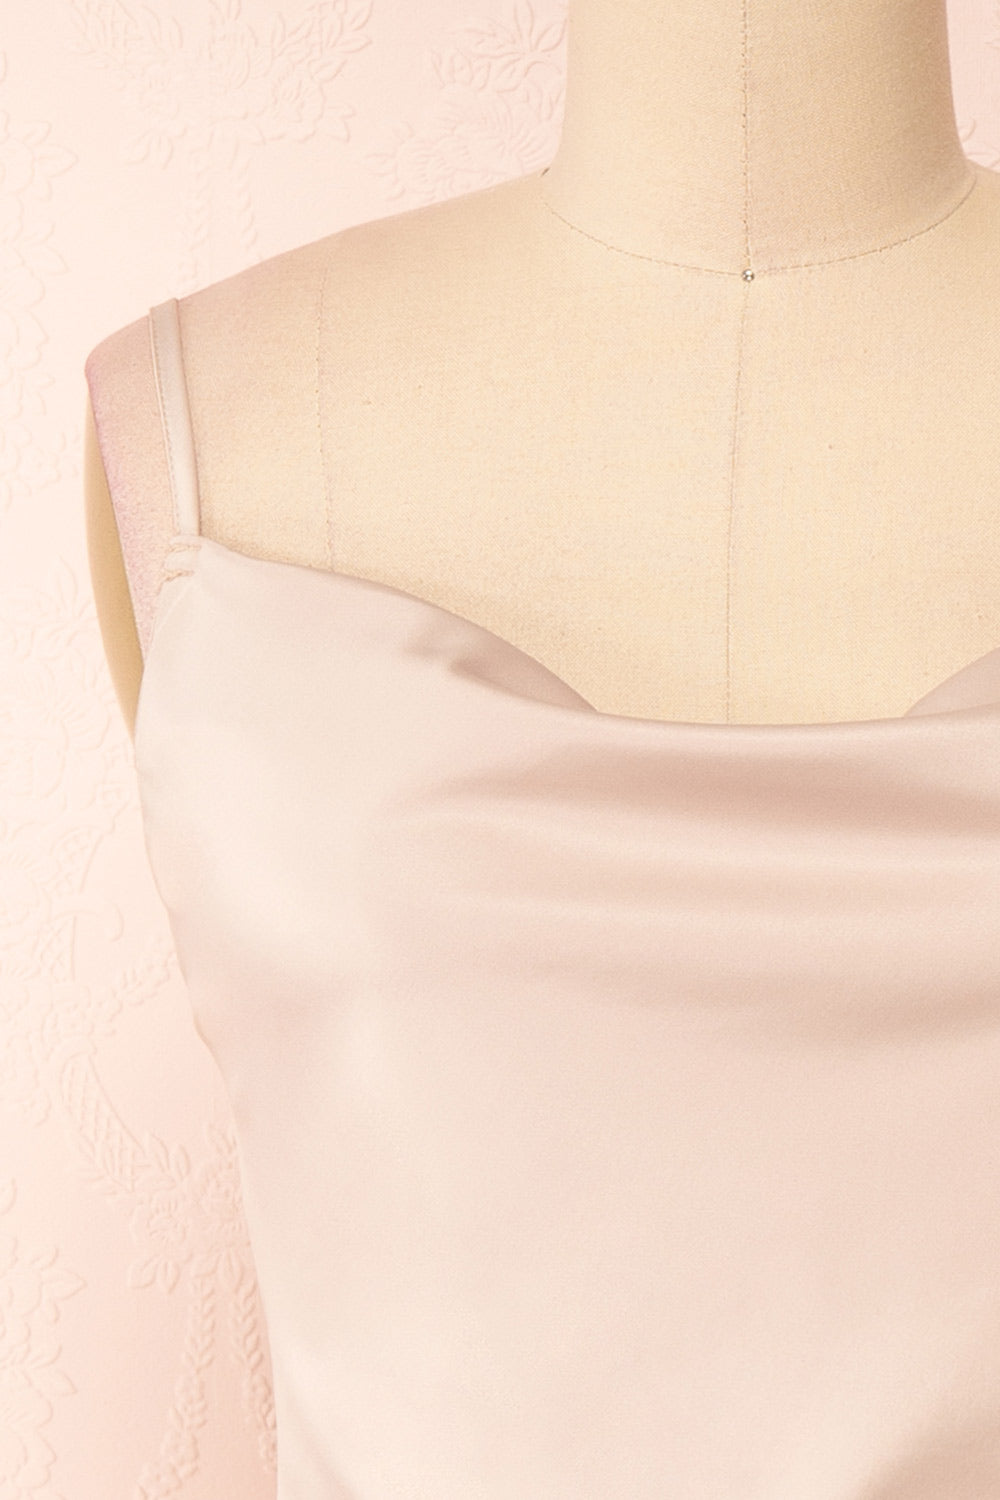 Chloe Champagne Silky Midi Slip Dress | Boutique 1861 front close-up 